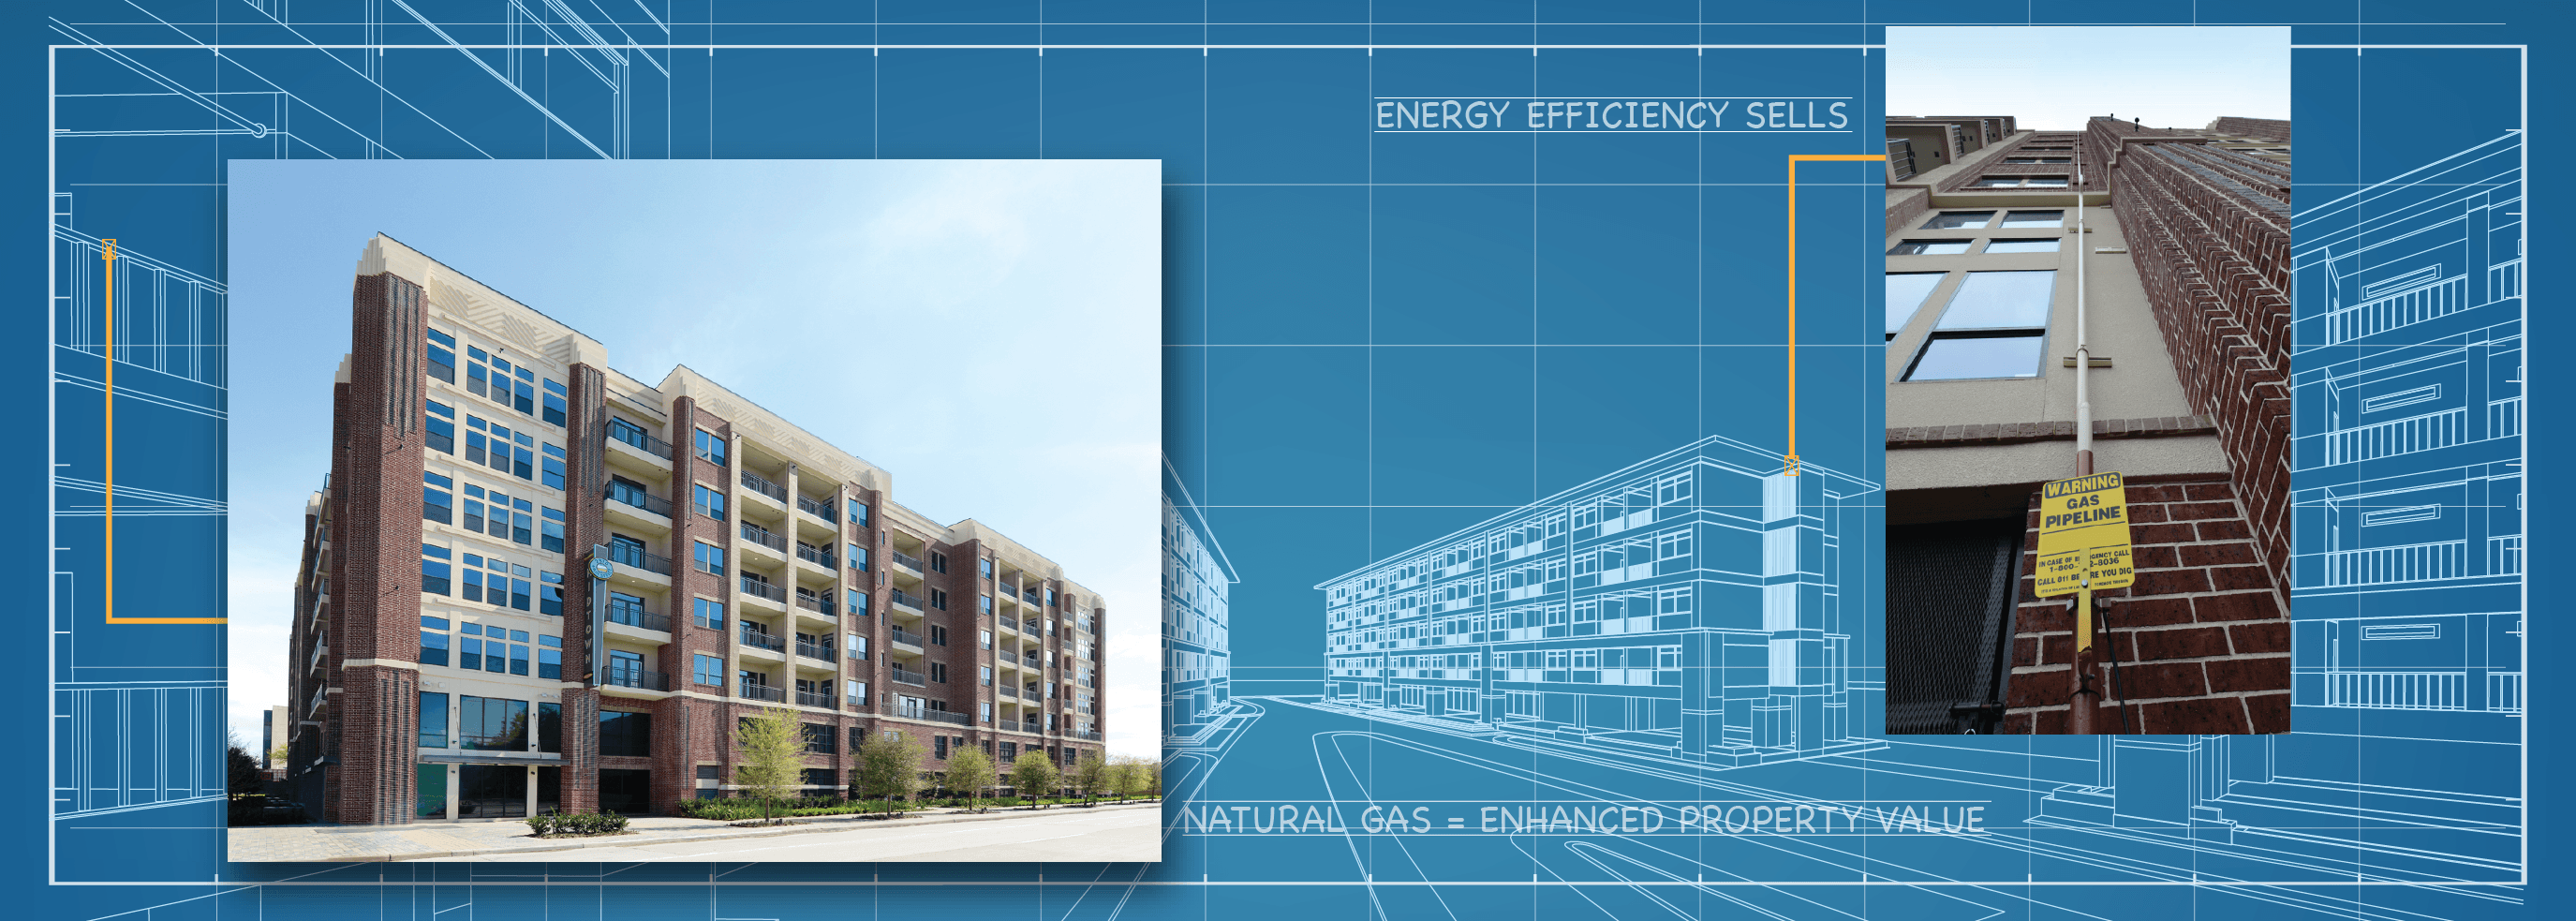 rendering multi-family home, energy efficiency sells, natrual gas = enhanced property values